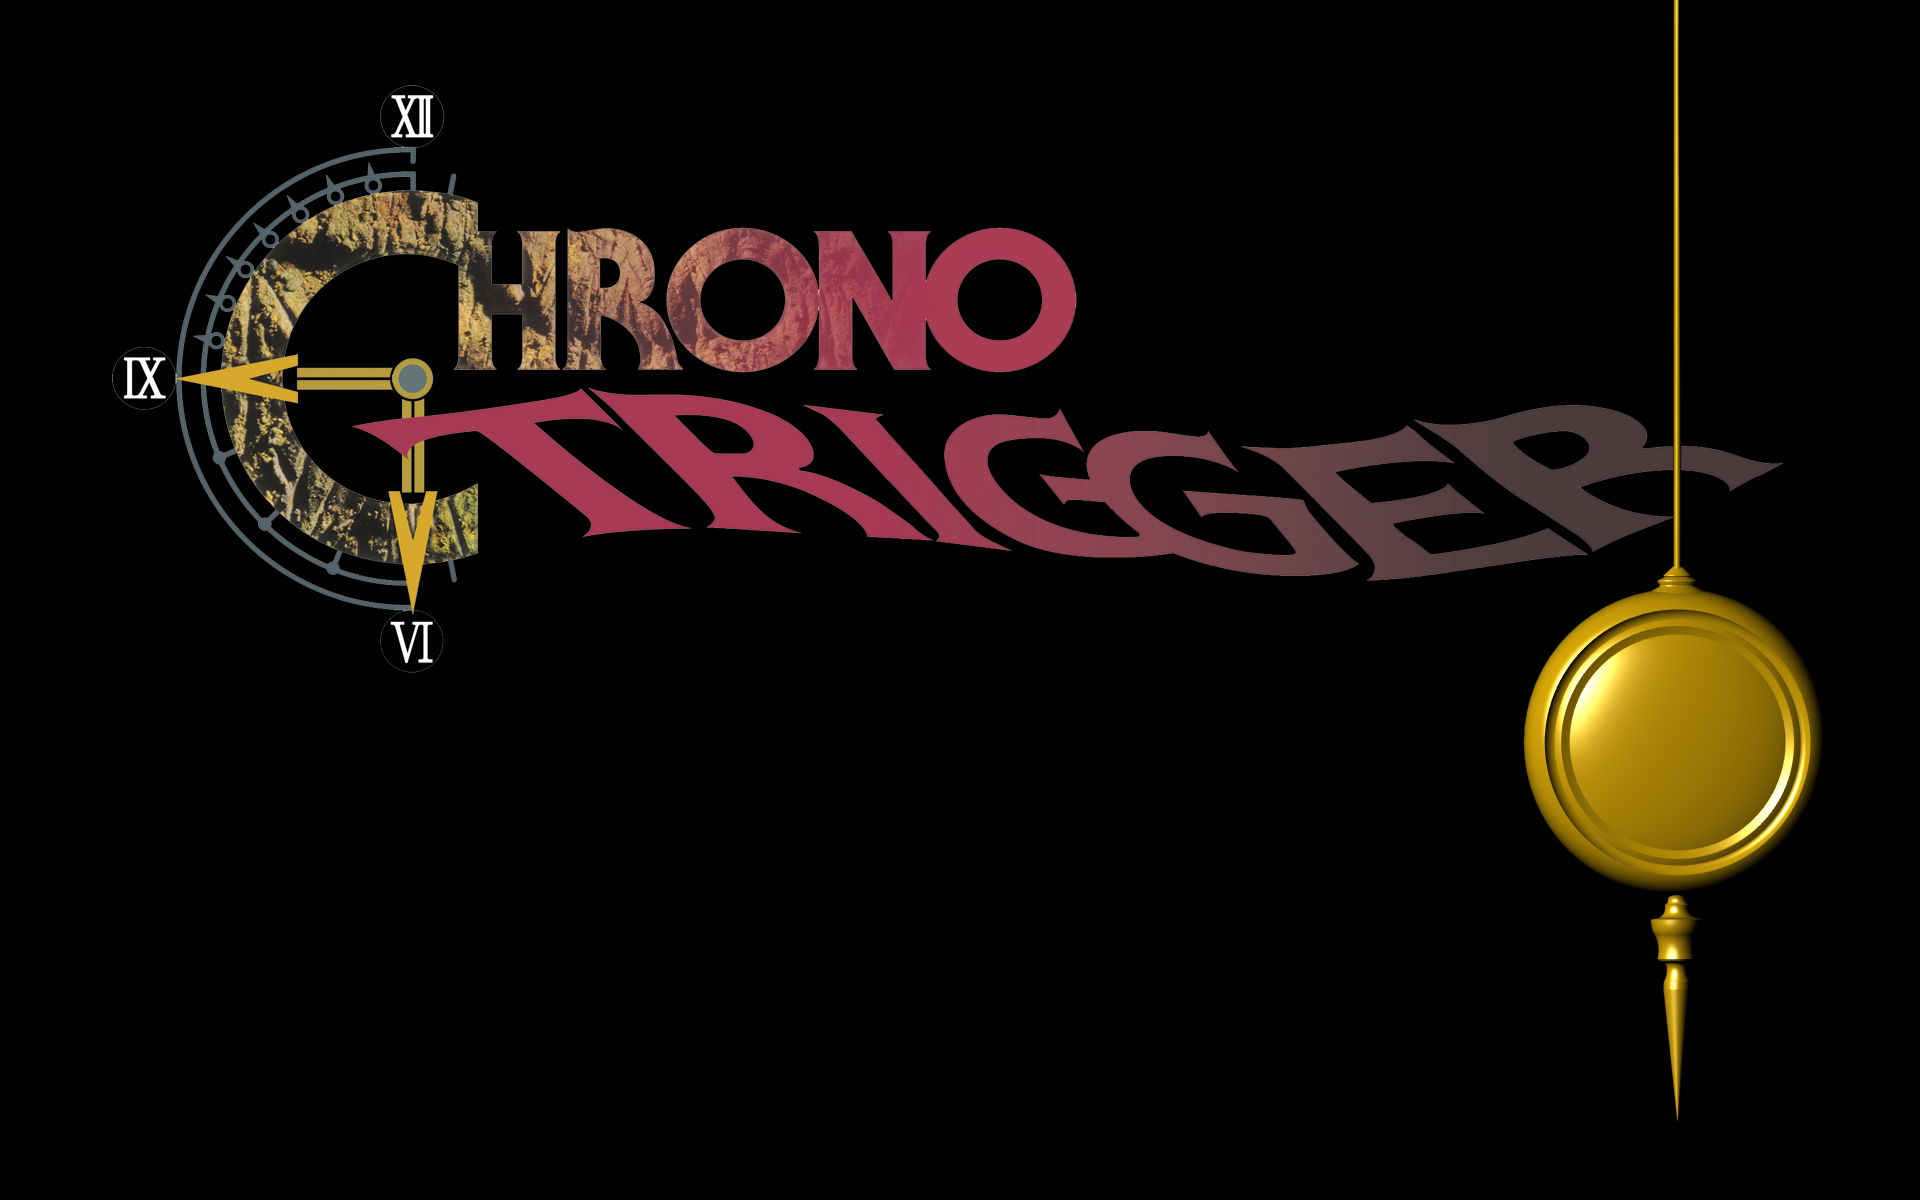 Chrono Trigger Wallpaper Wallpoper